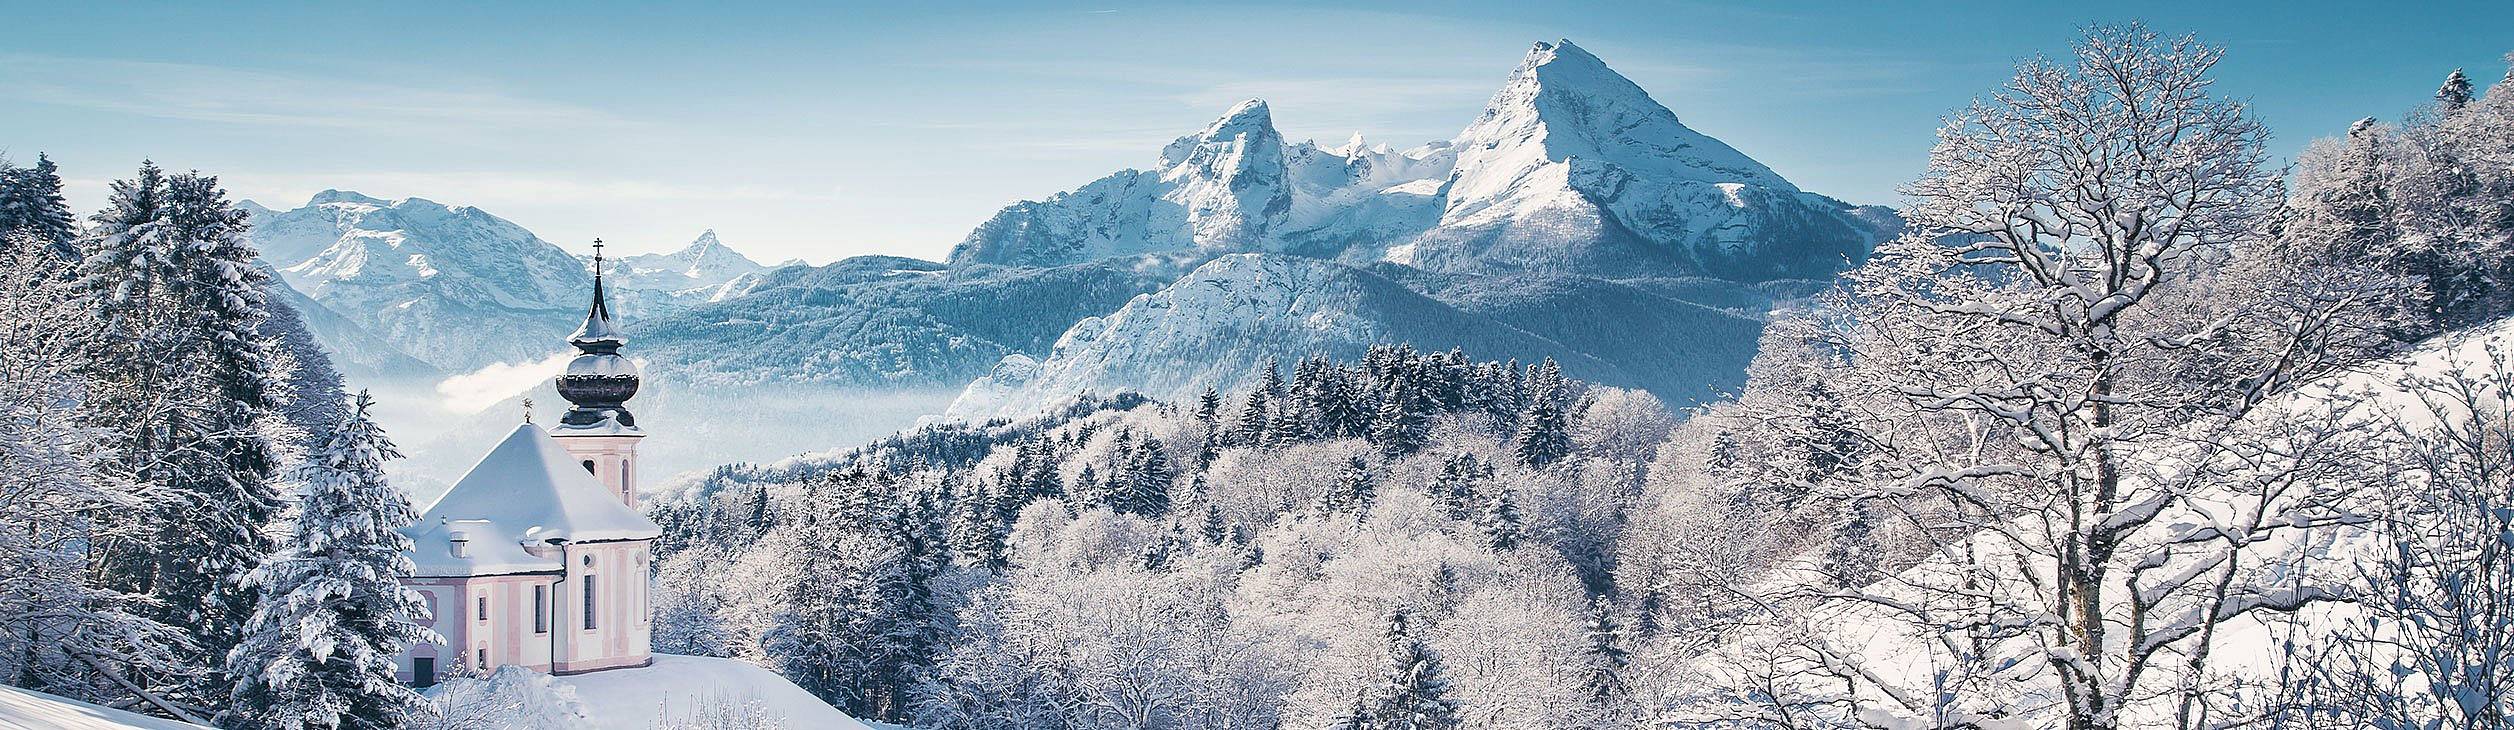 winter landscape in the Bavarian Alps